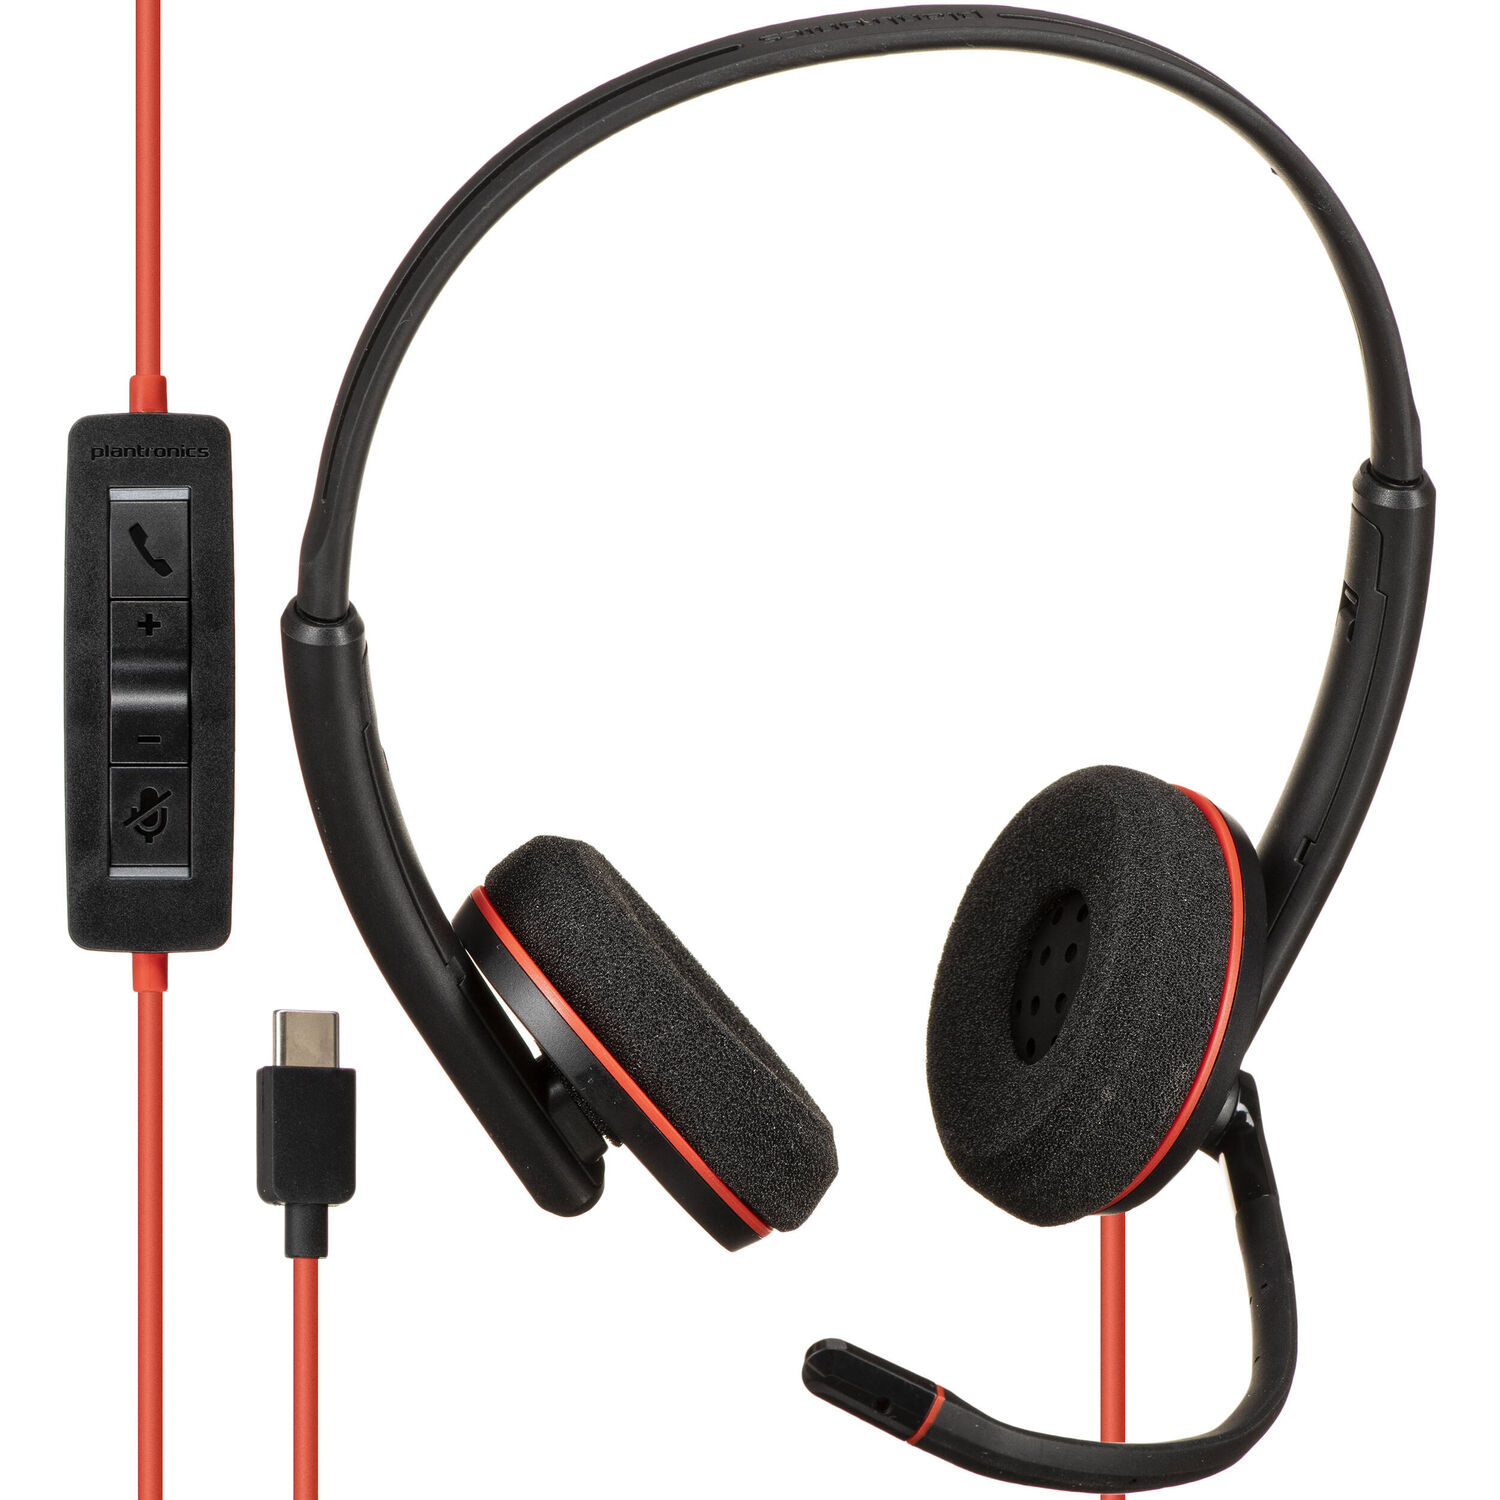 Headset Estéreo Uc Plantronics Blackwire 3220 Usb Type C para Uso con Cable